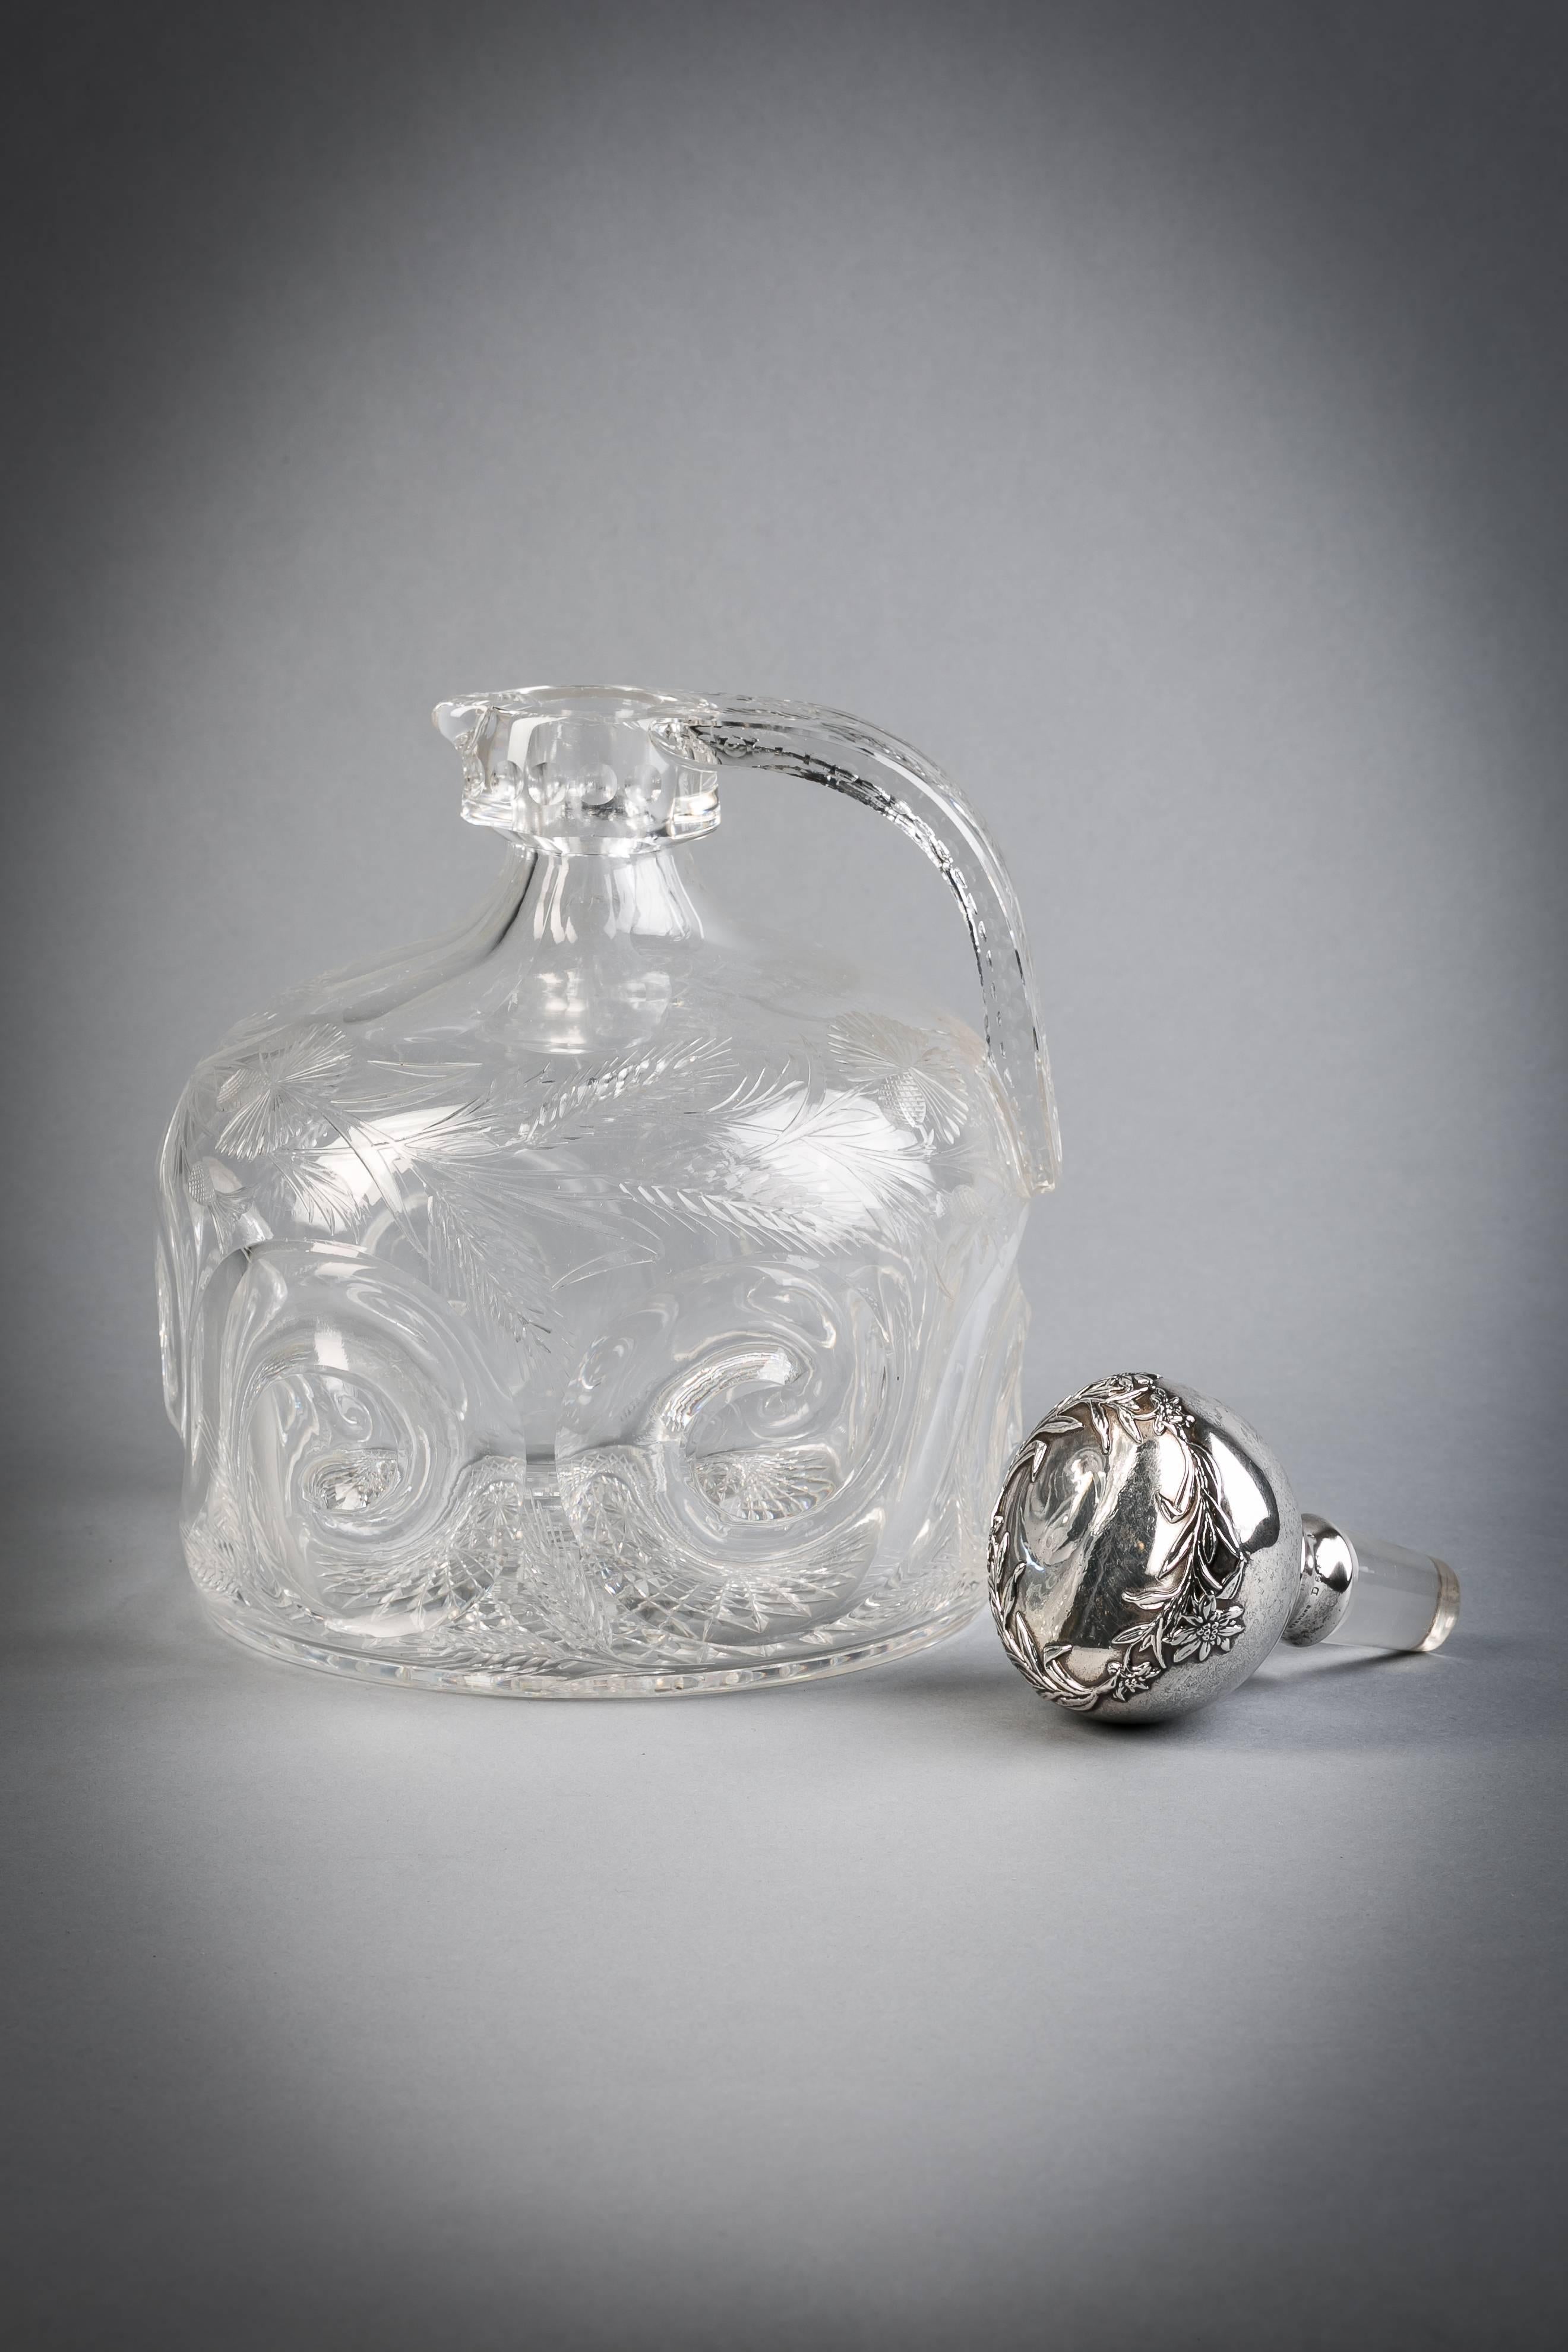 Gorham silver and crystal decanter, circa 1910.

Gorham silver stopper.